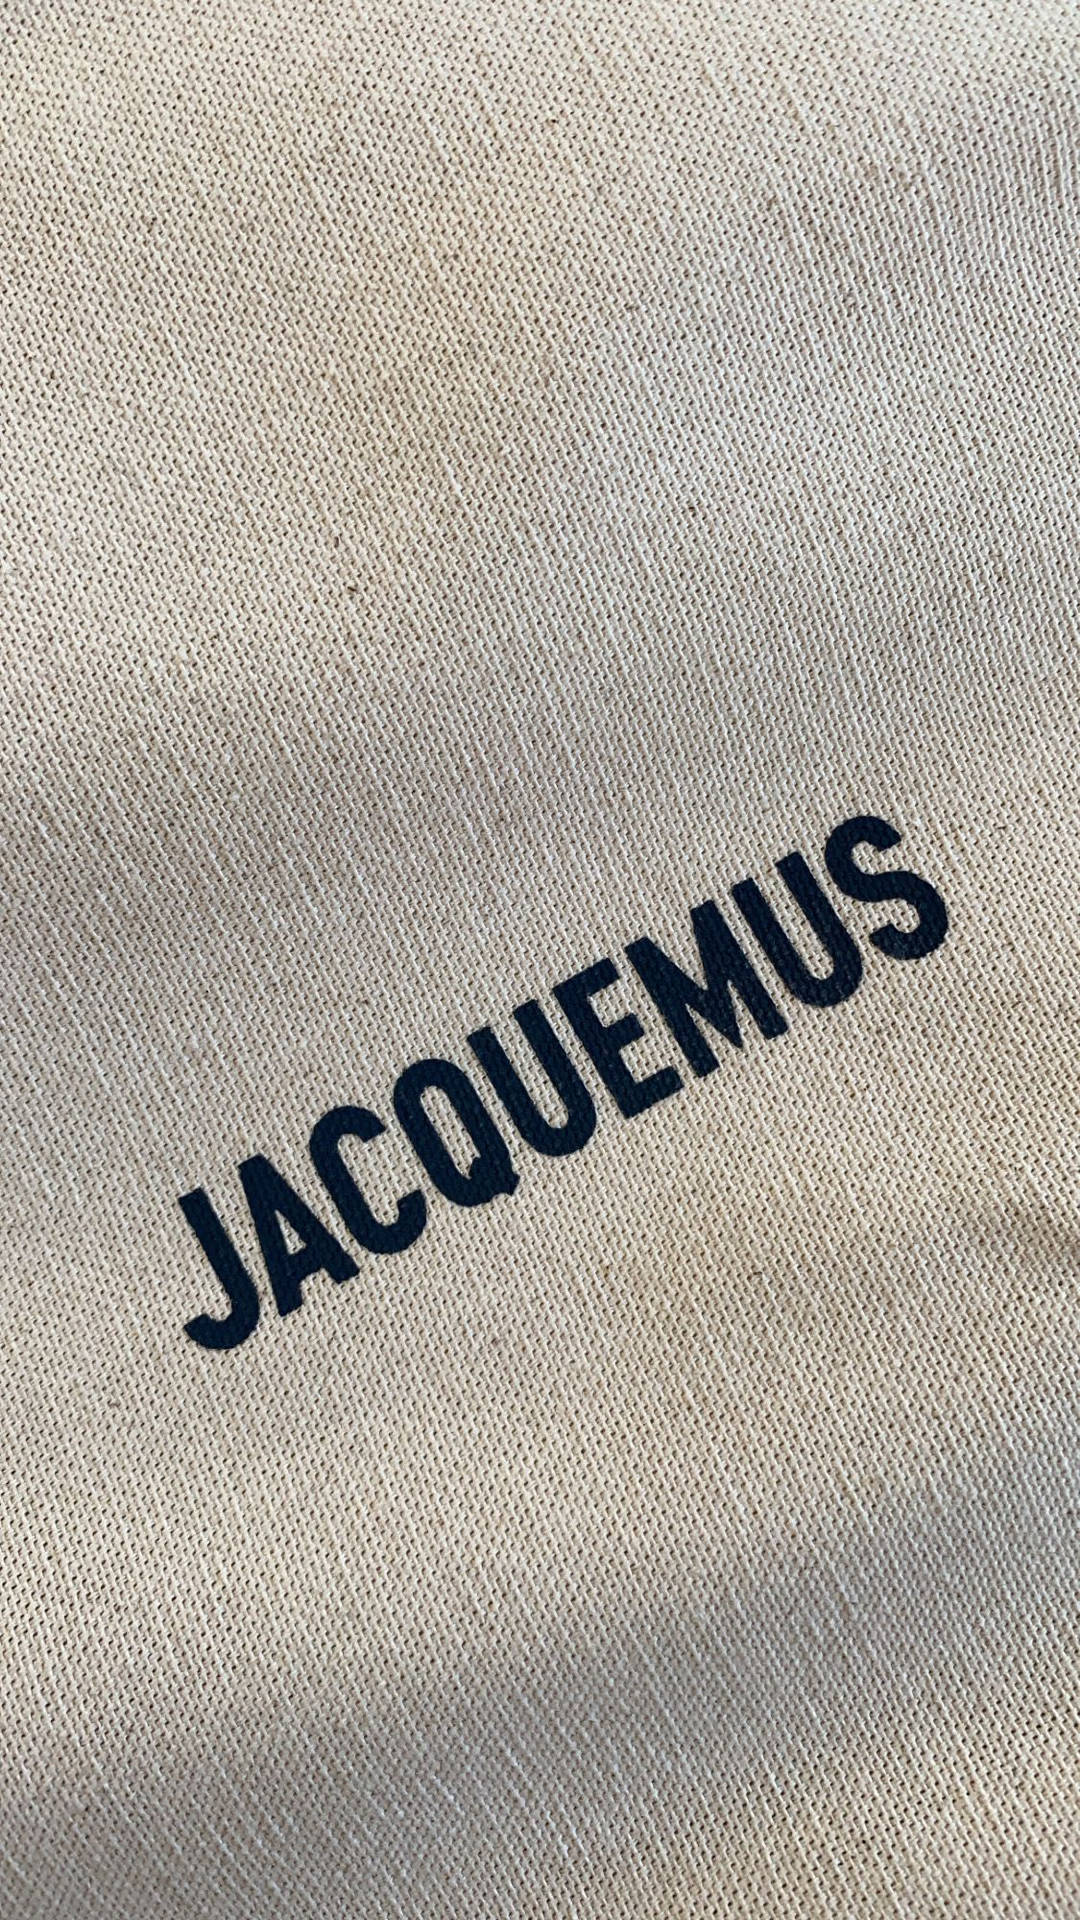 Jacquemus Wallpapers - Wallpaper Cave